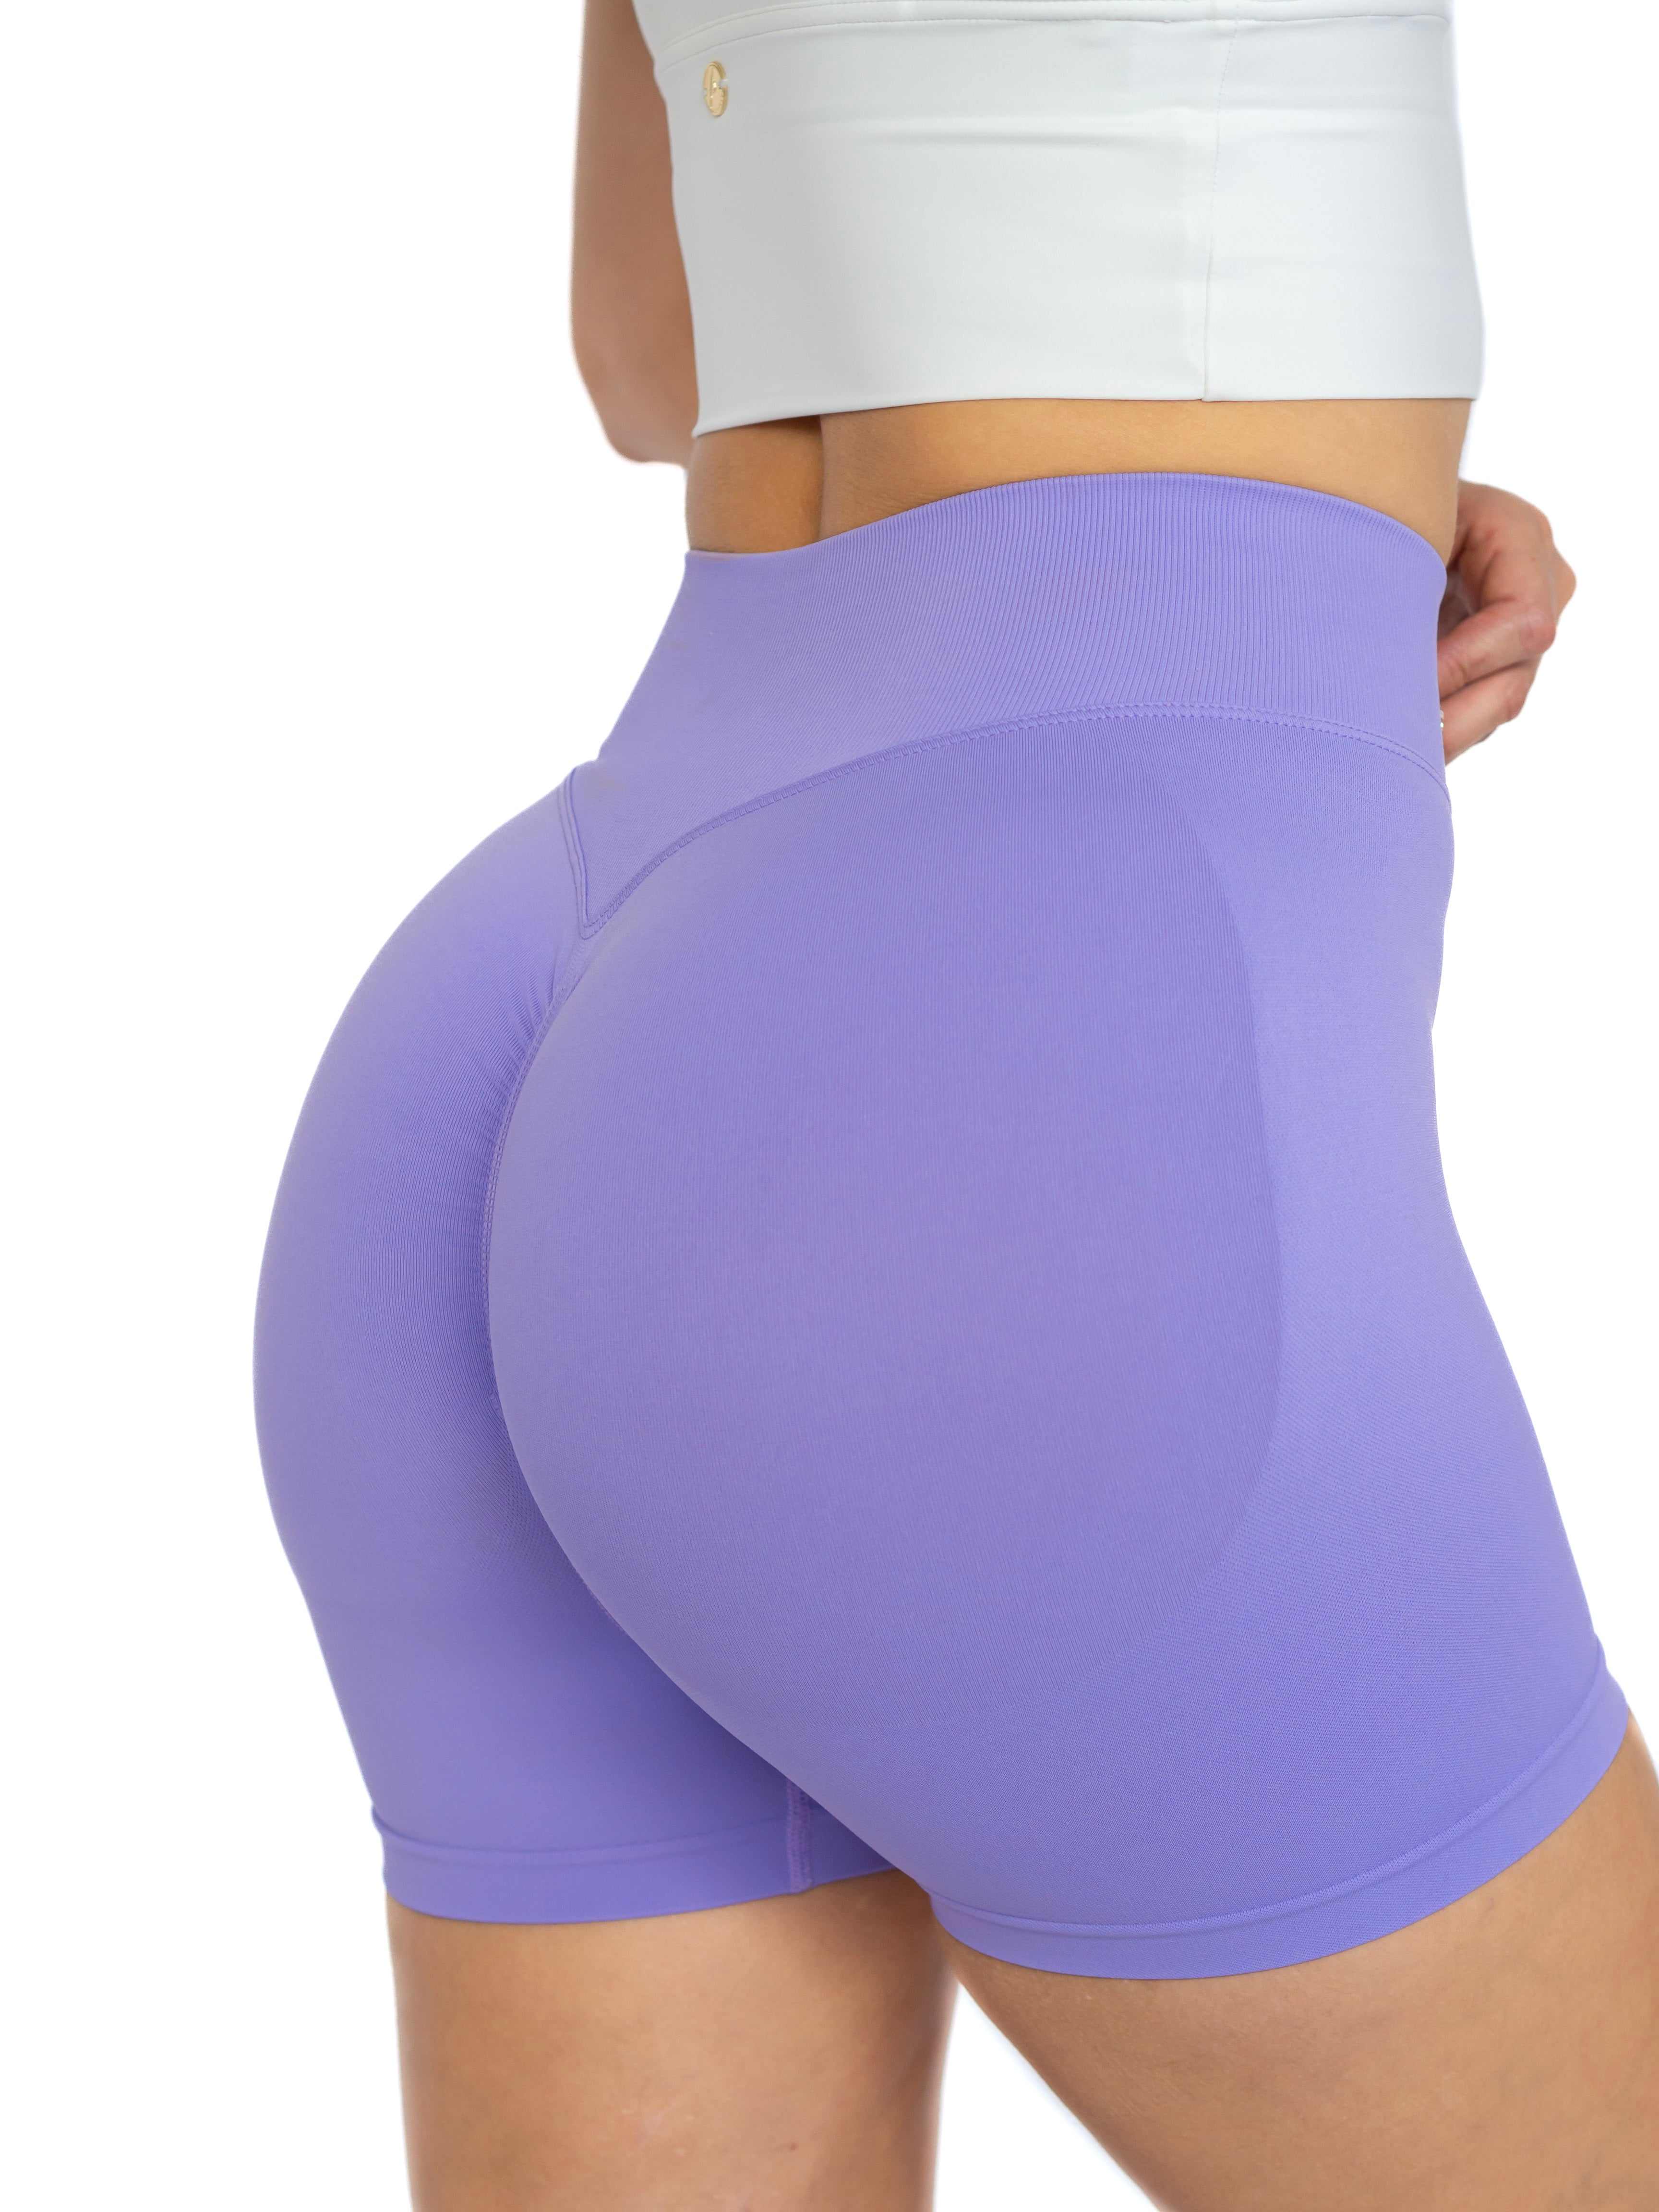 Perfect Peachy Shorts - Pastel Purple